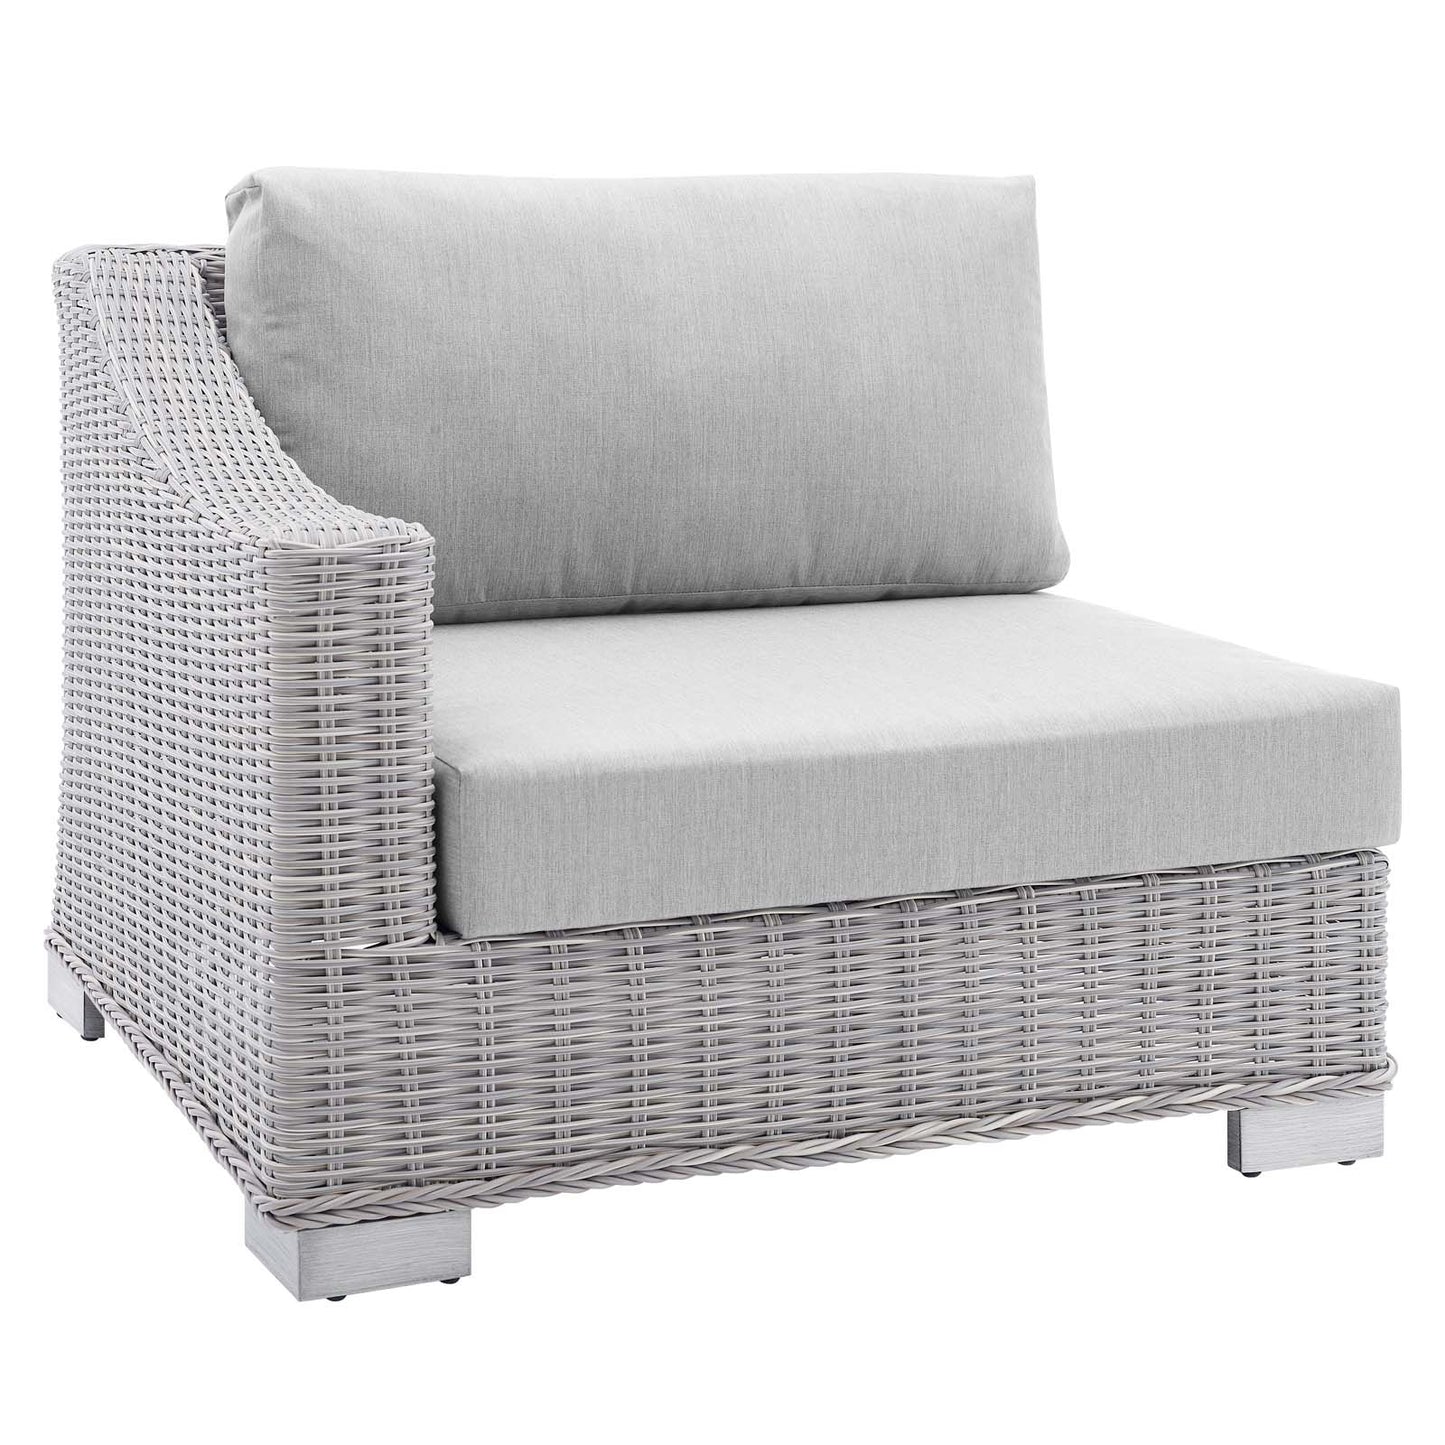 Conway Sunbrella® Outdoor Patio Wicker Rattan 6-Piece Furniture Set Light Gray Gray EEI-4363-LGR-GRY